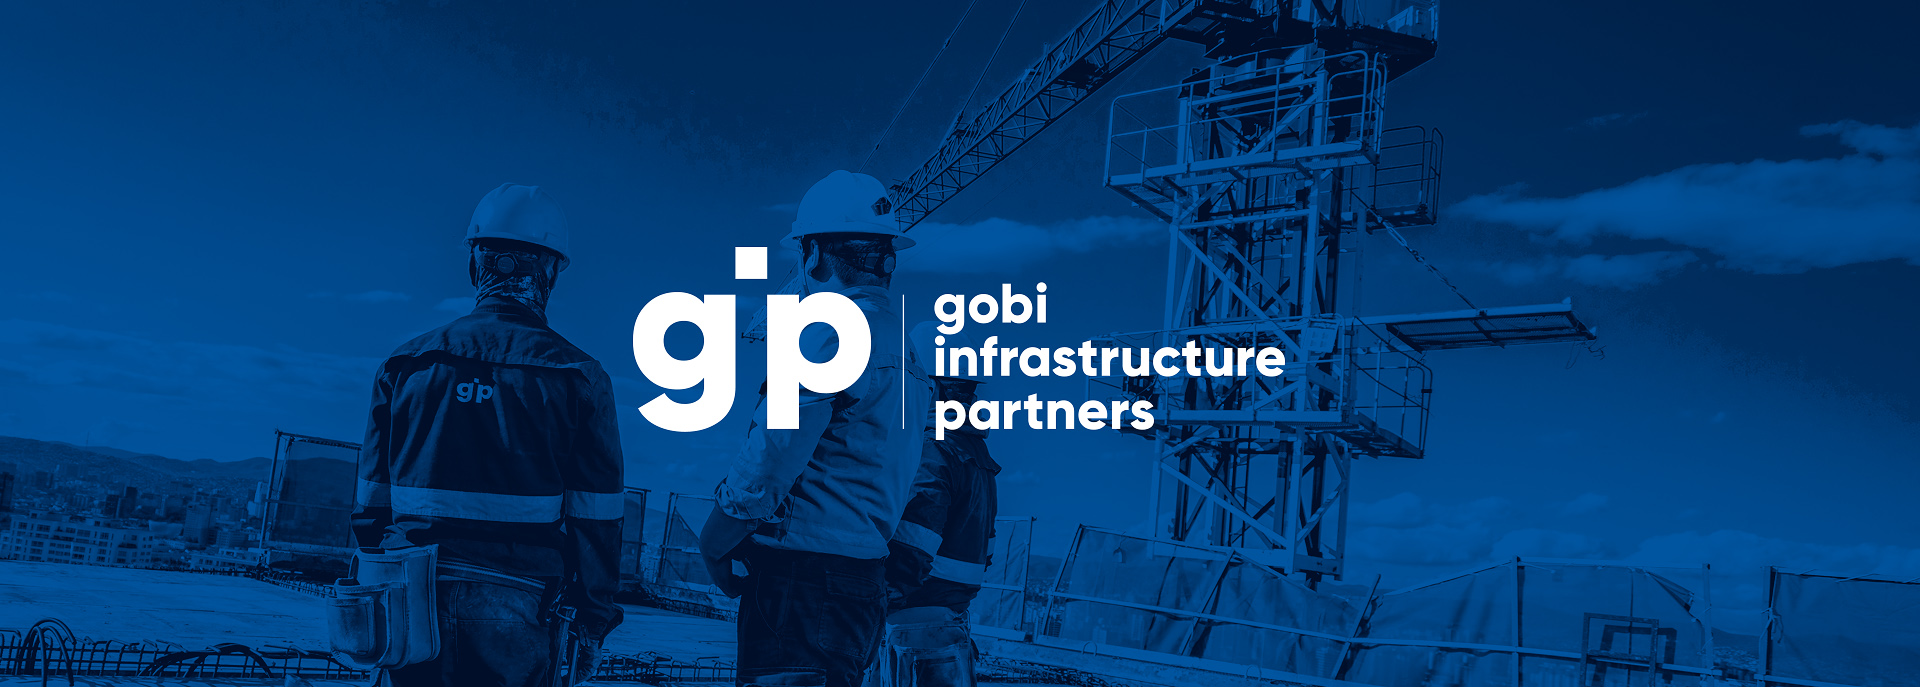 Gobi Infrastructure Partners